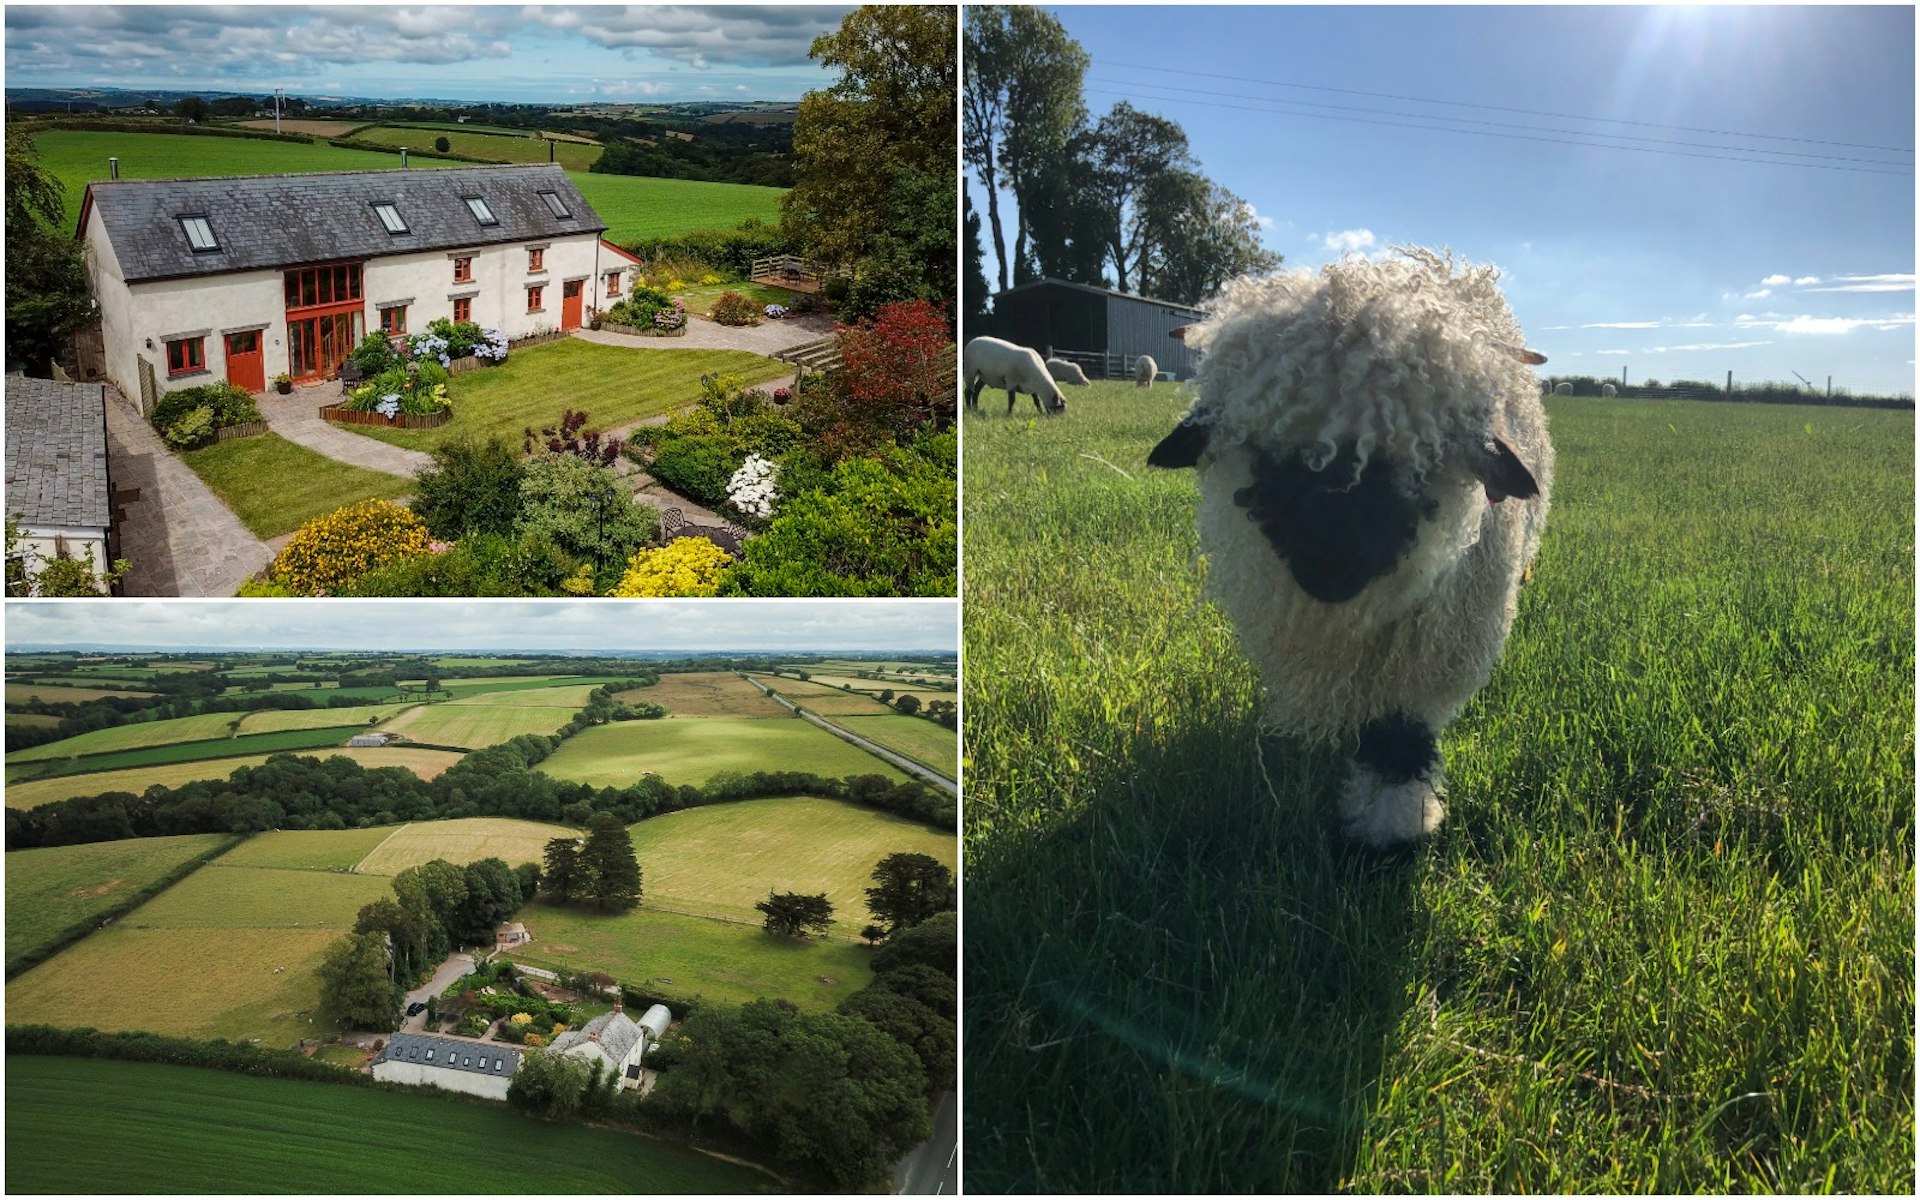 An English farmhouse with lambs